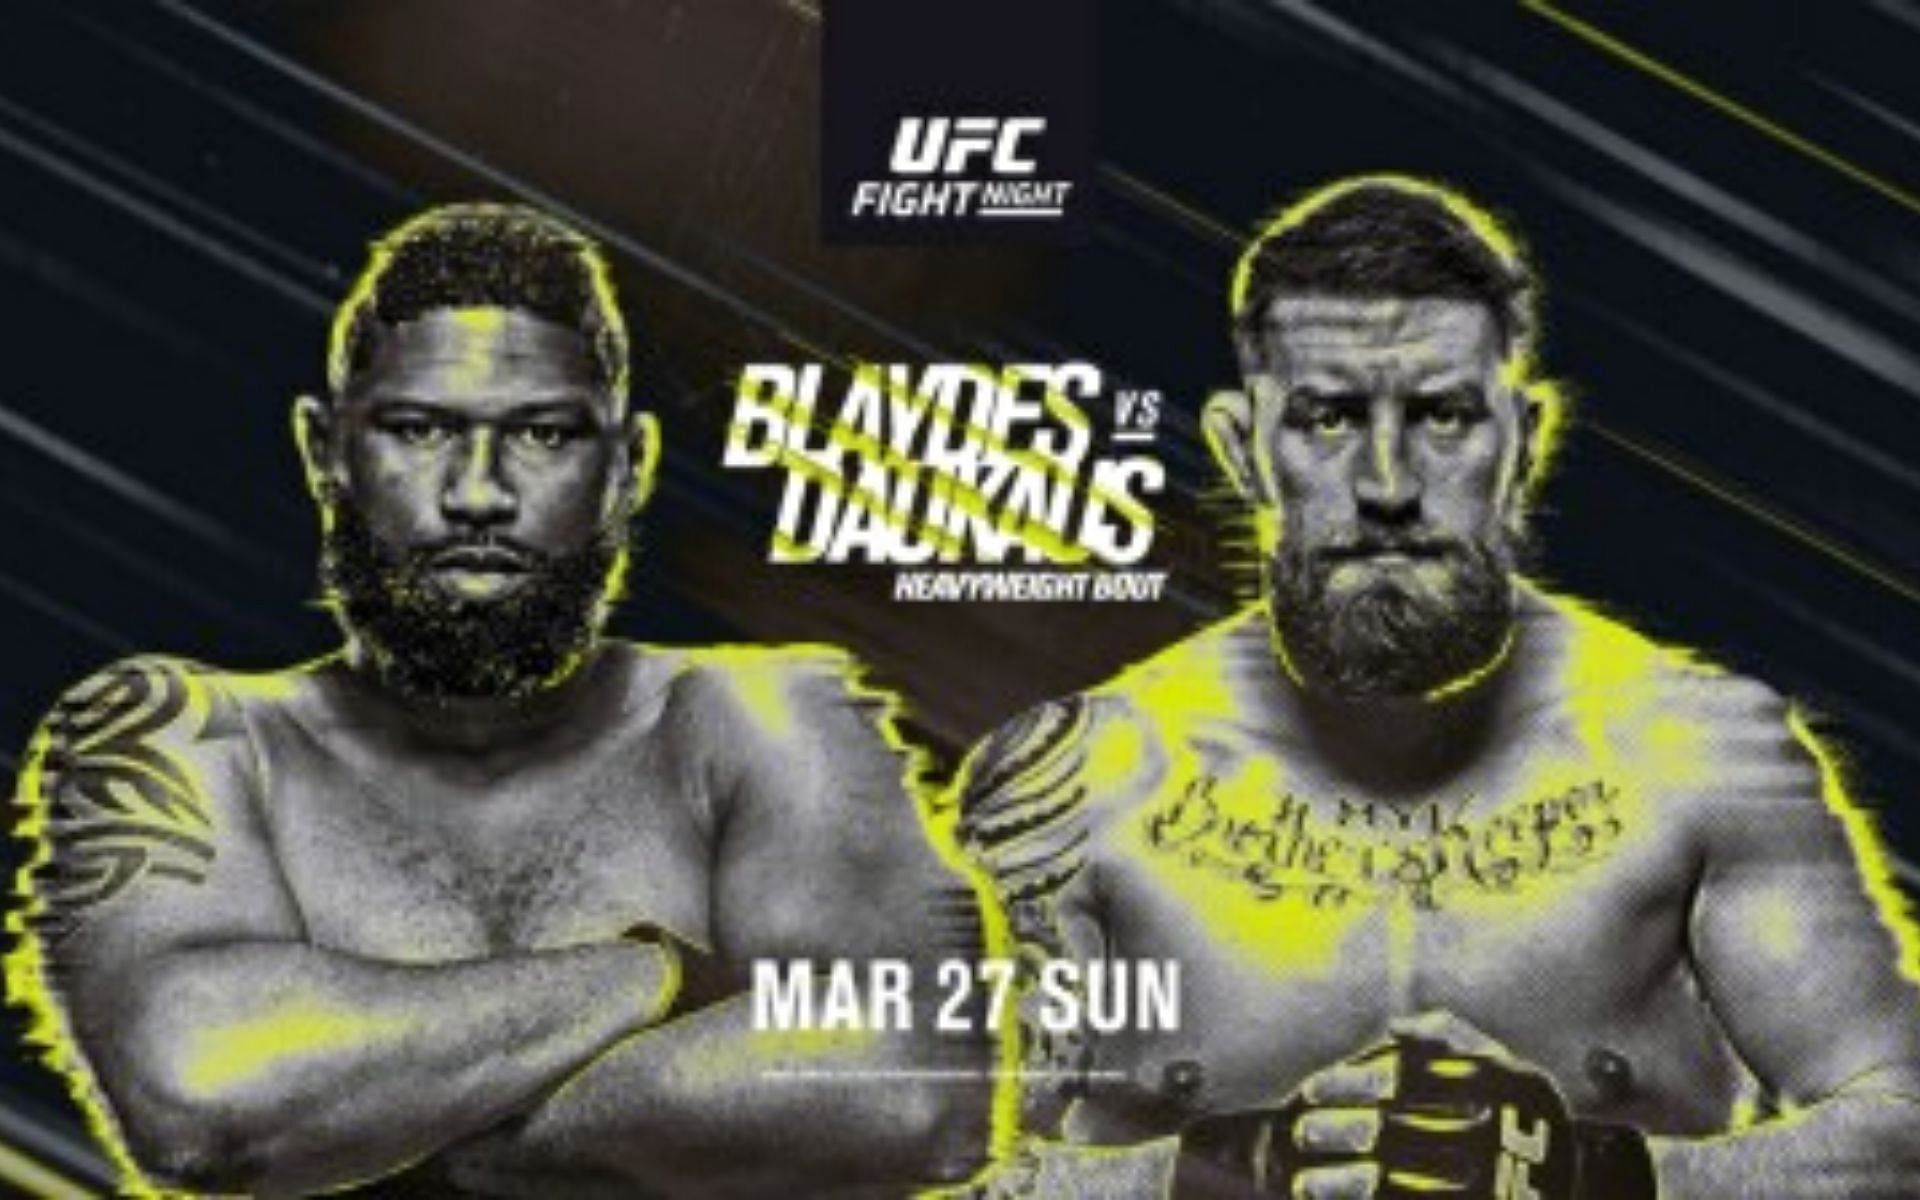 UFC Fight Night: Blaydes vs. Daukaus